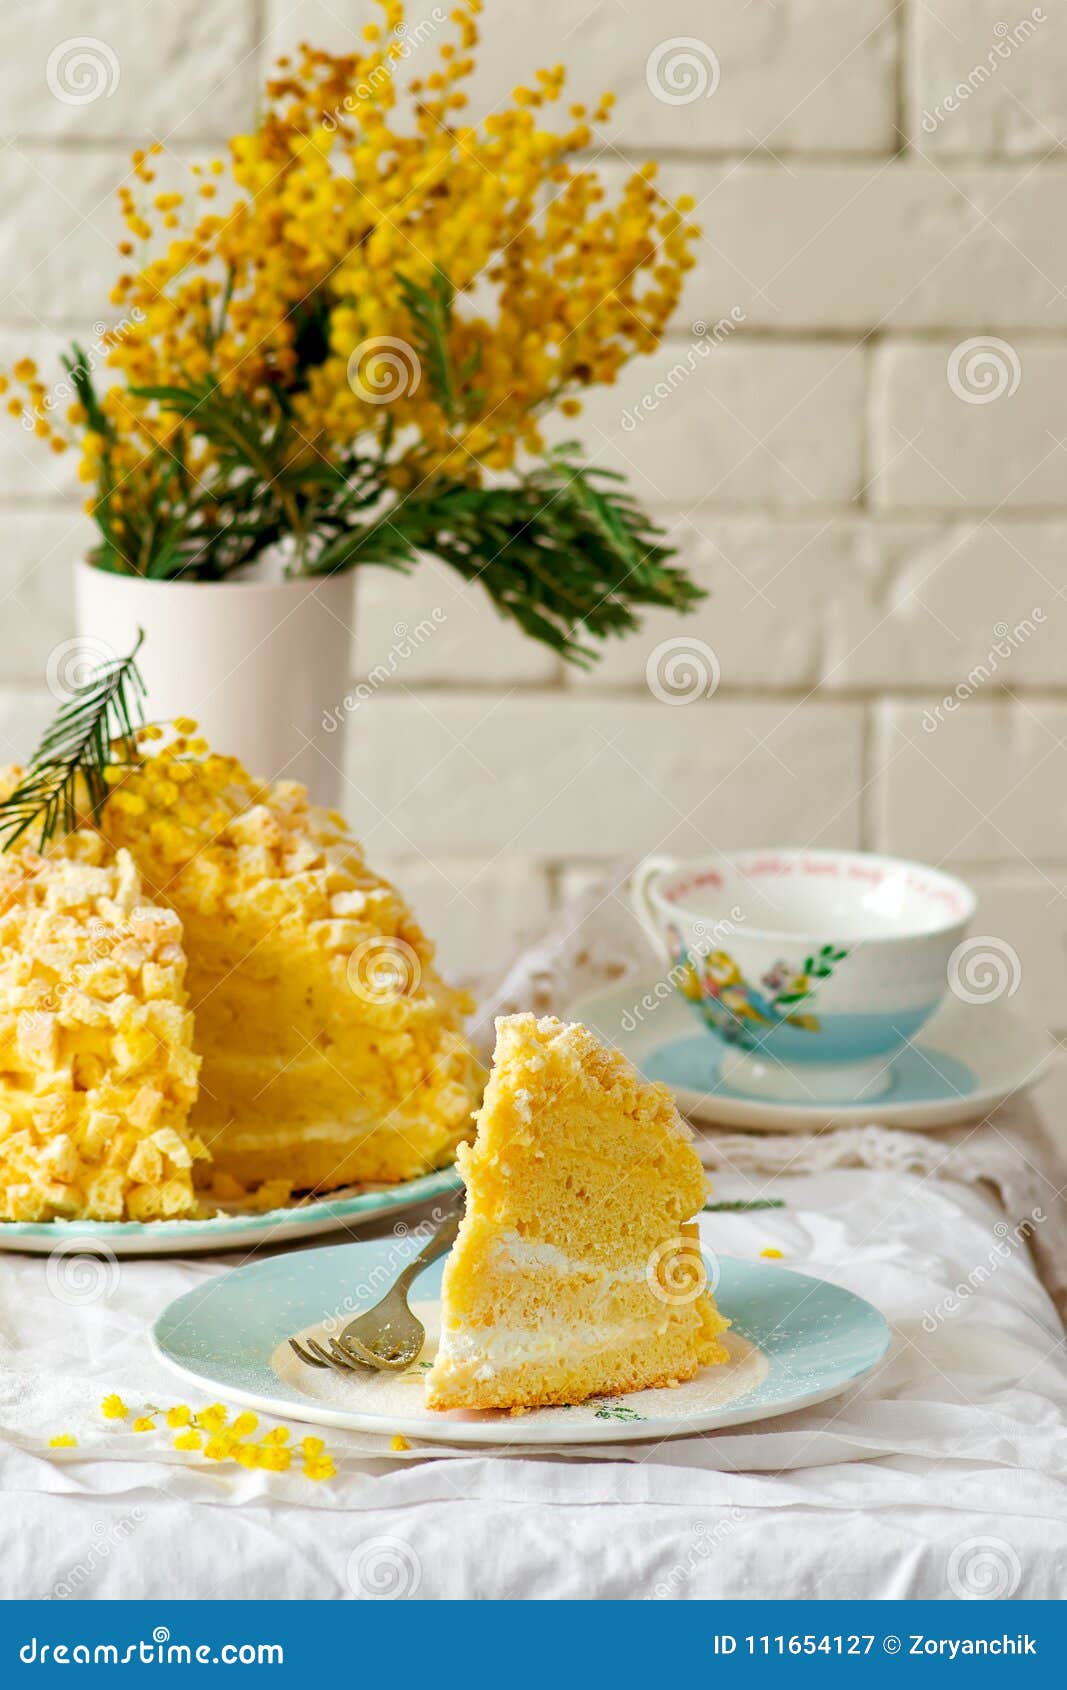 ITALIAN MIMOSA CAKE stock image. Image of pastries, dessert - 111654127